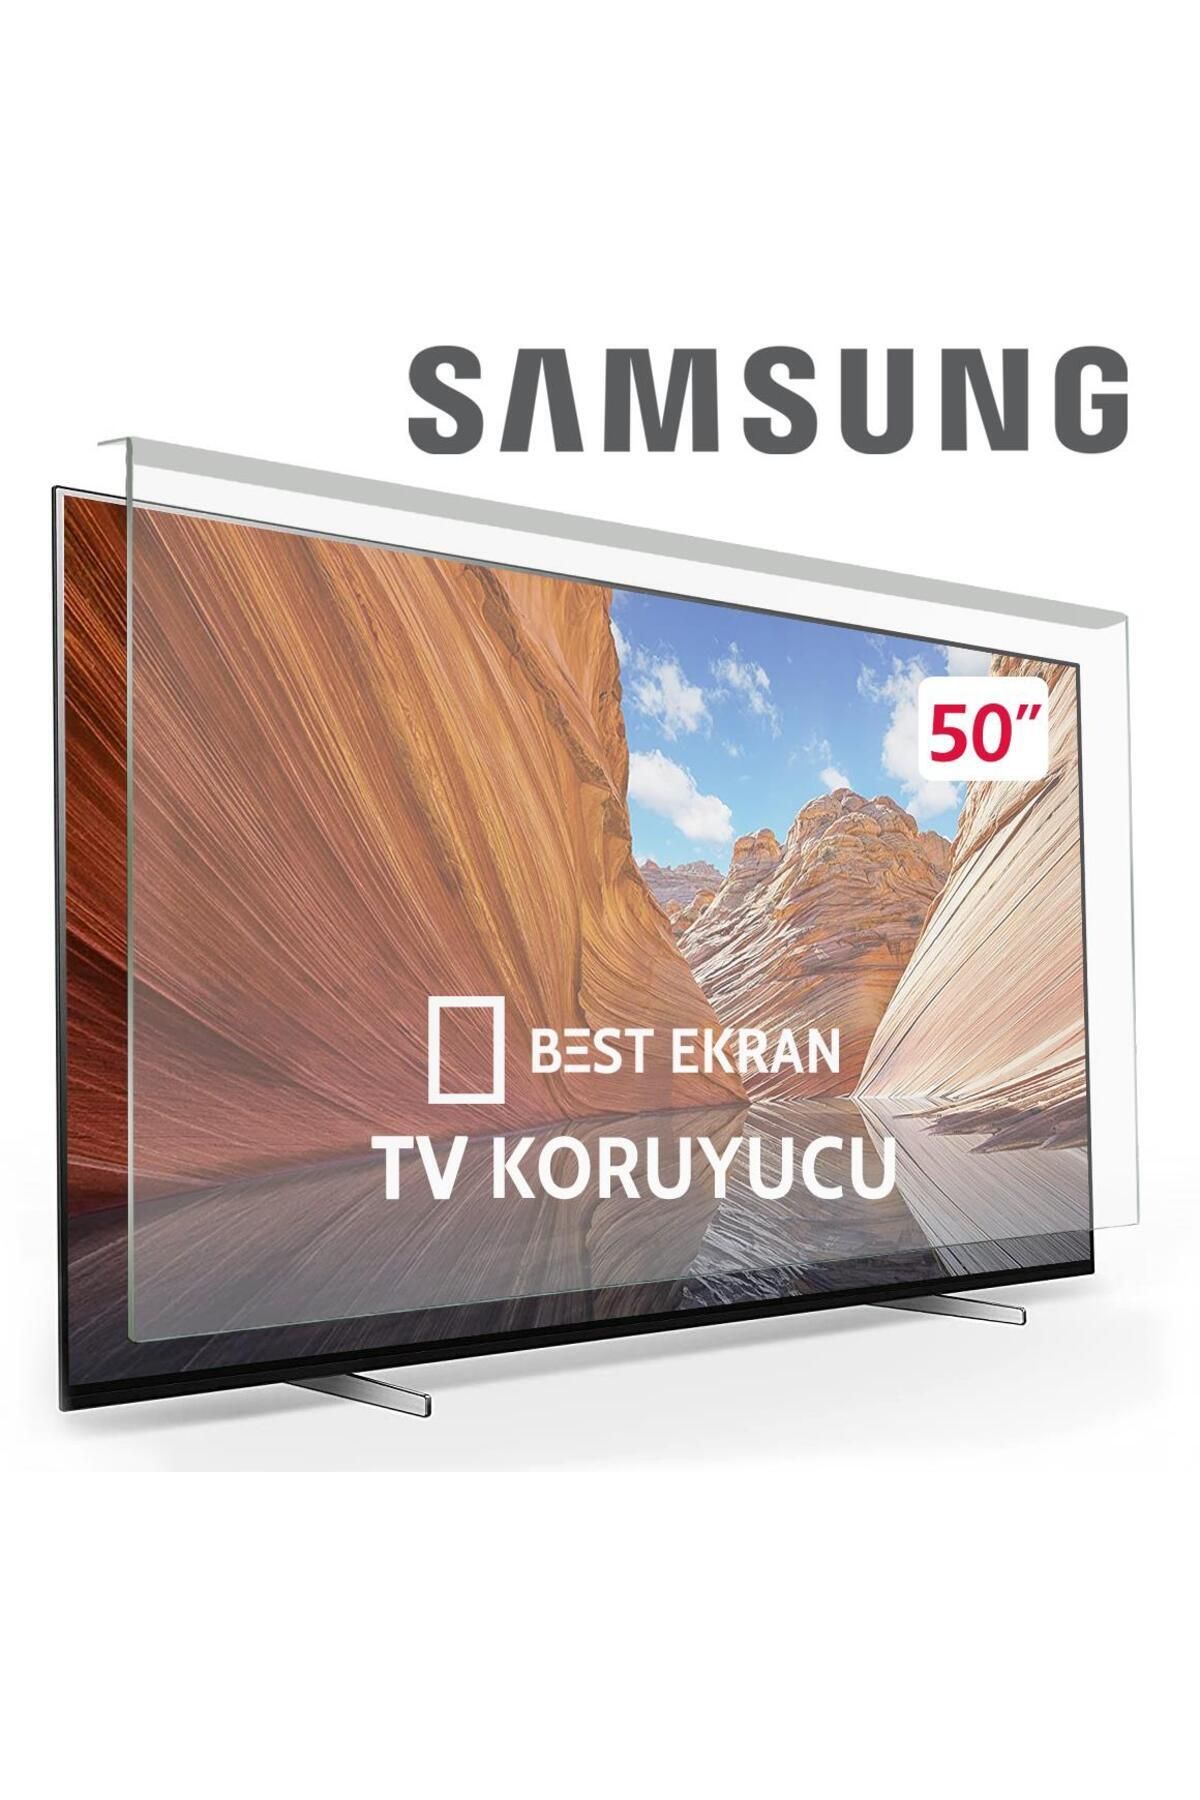 Bestekran Samsung LED TV 50" inç 125cm Smart Crystal Uhd 4k-8k OLED QLED Televizyon Ekran Koruyucu